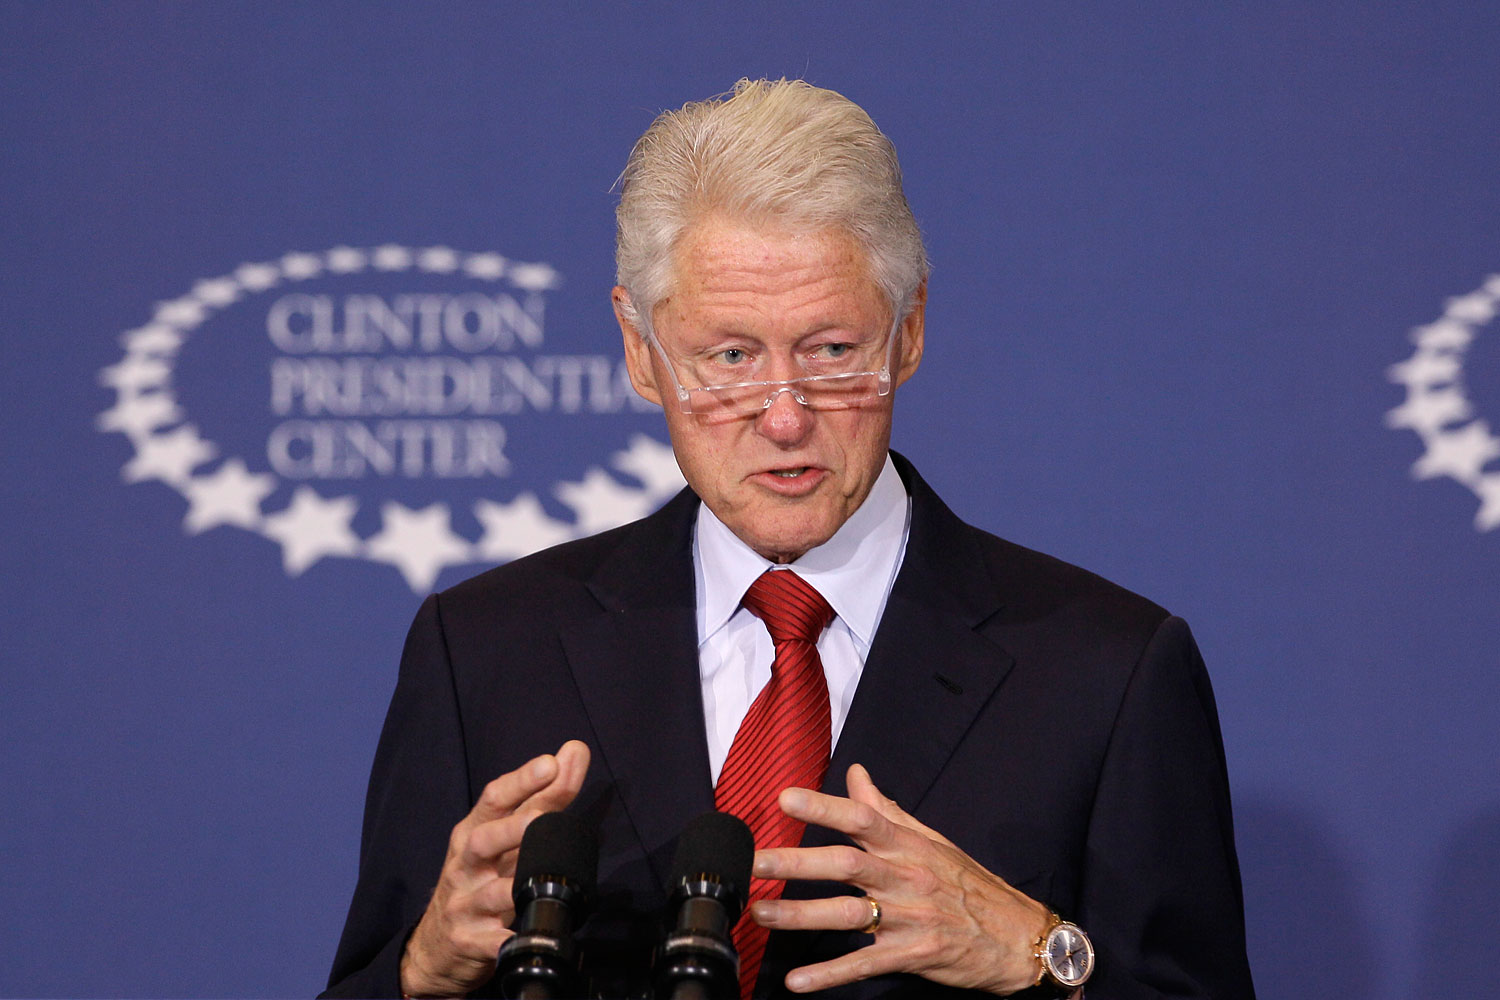 Former President Bill Clinton speaks about health care at the Clinton Presidential Center in Little Rock, Ark., Sept. 4, 2013. (Danny Johnston&mdash;AP)